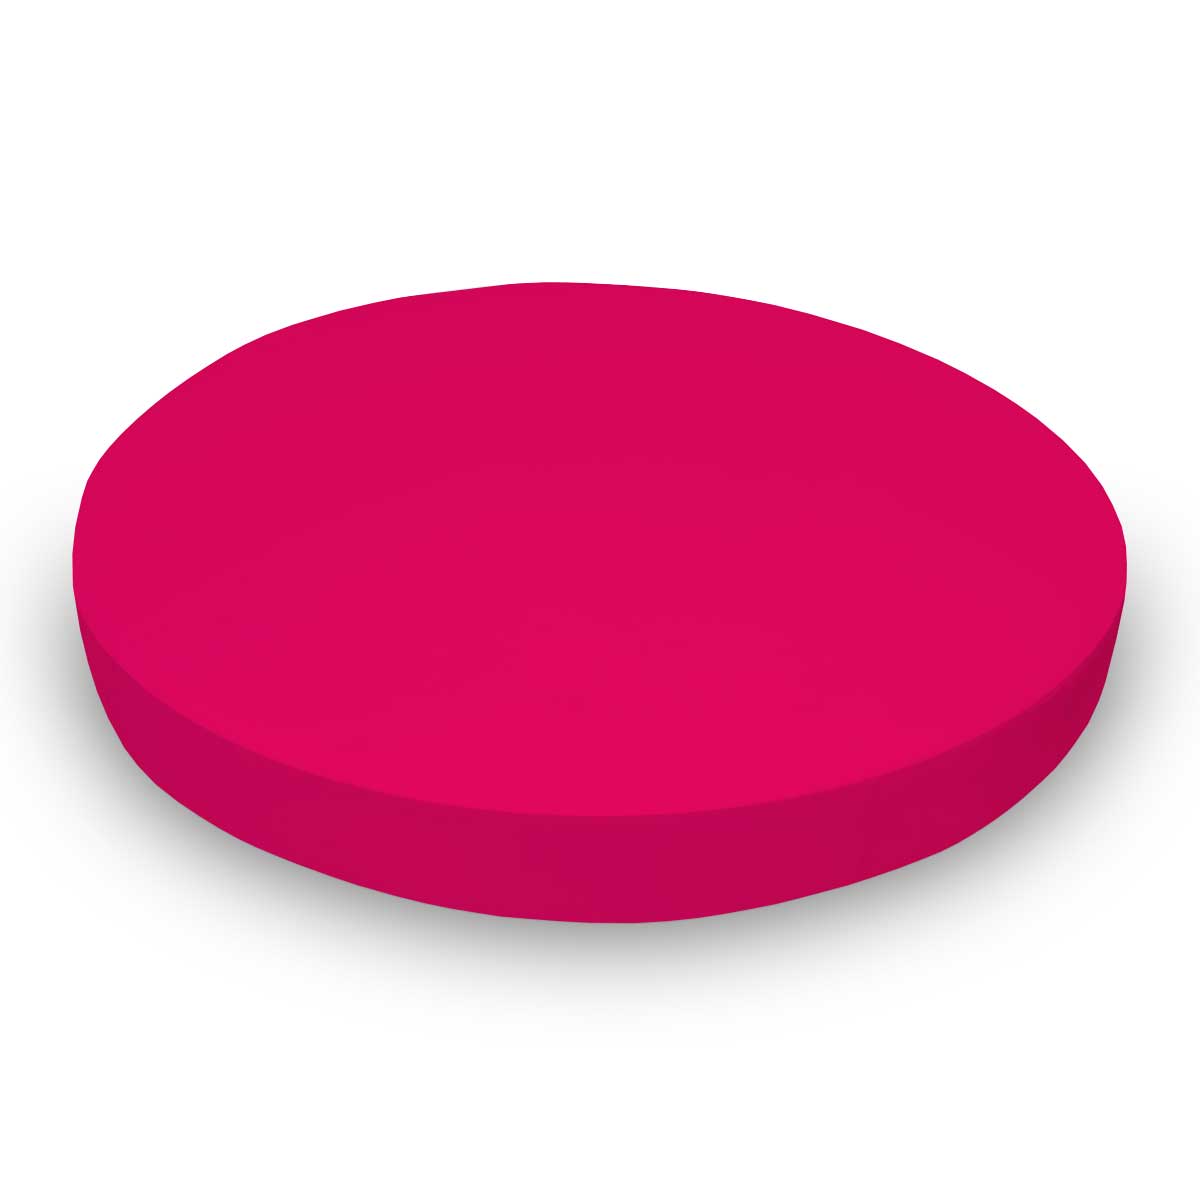 Oval Crib (Stokke Sleepi) - Hot Pink Jersey Knit - Fitted  Oval